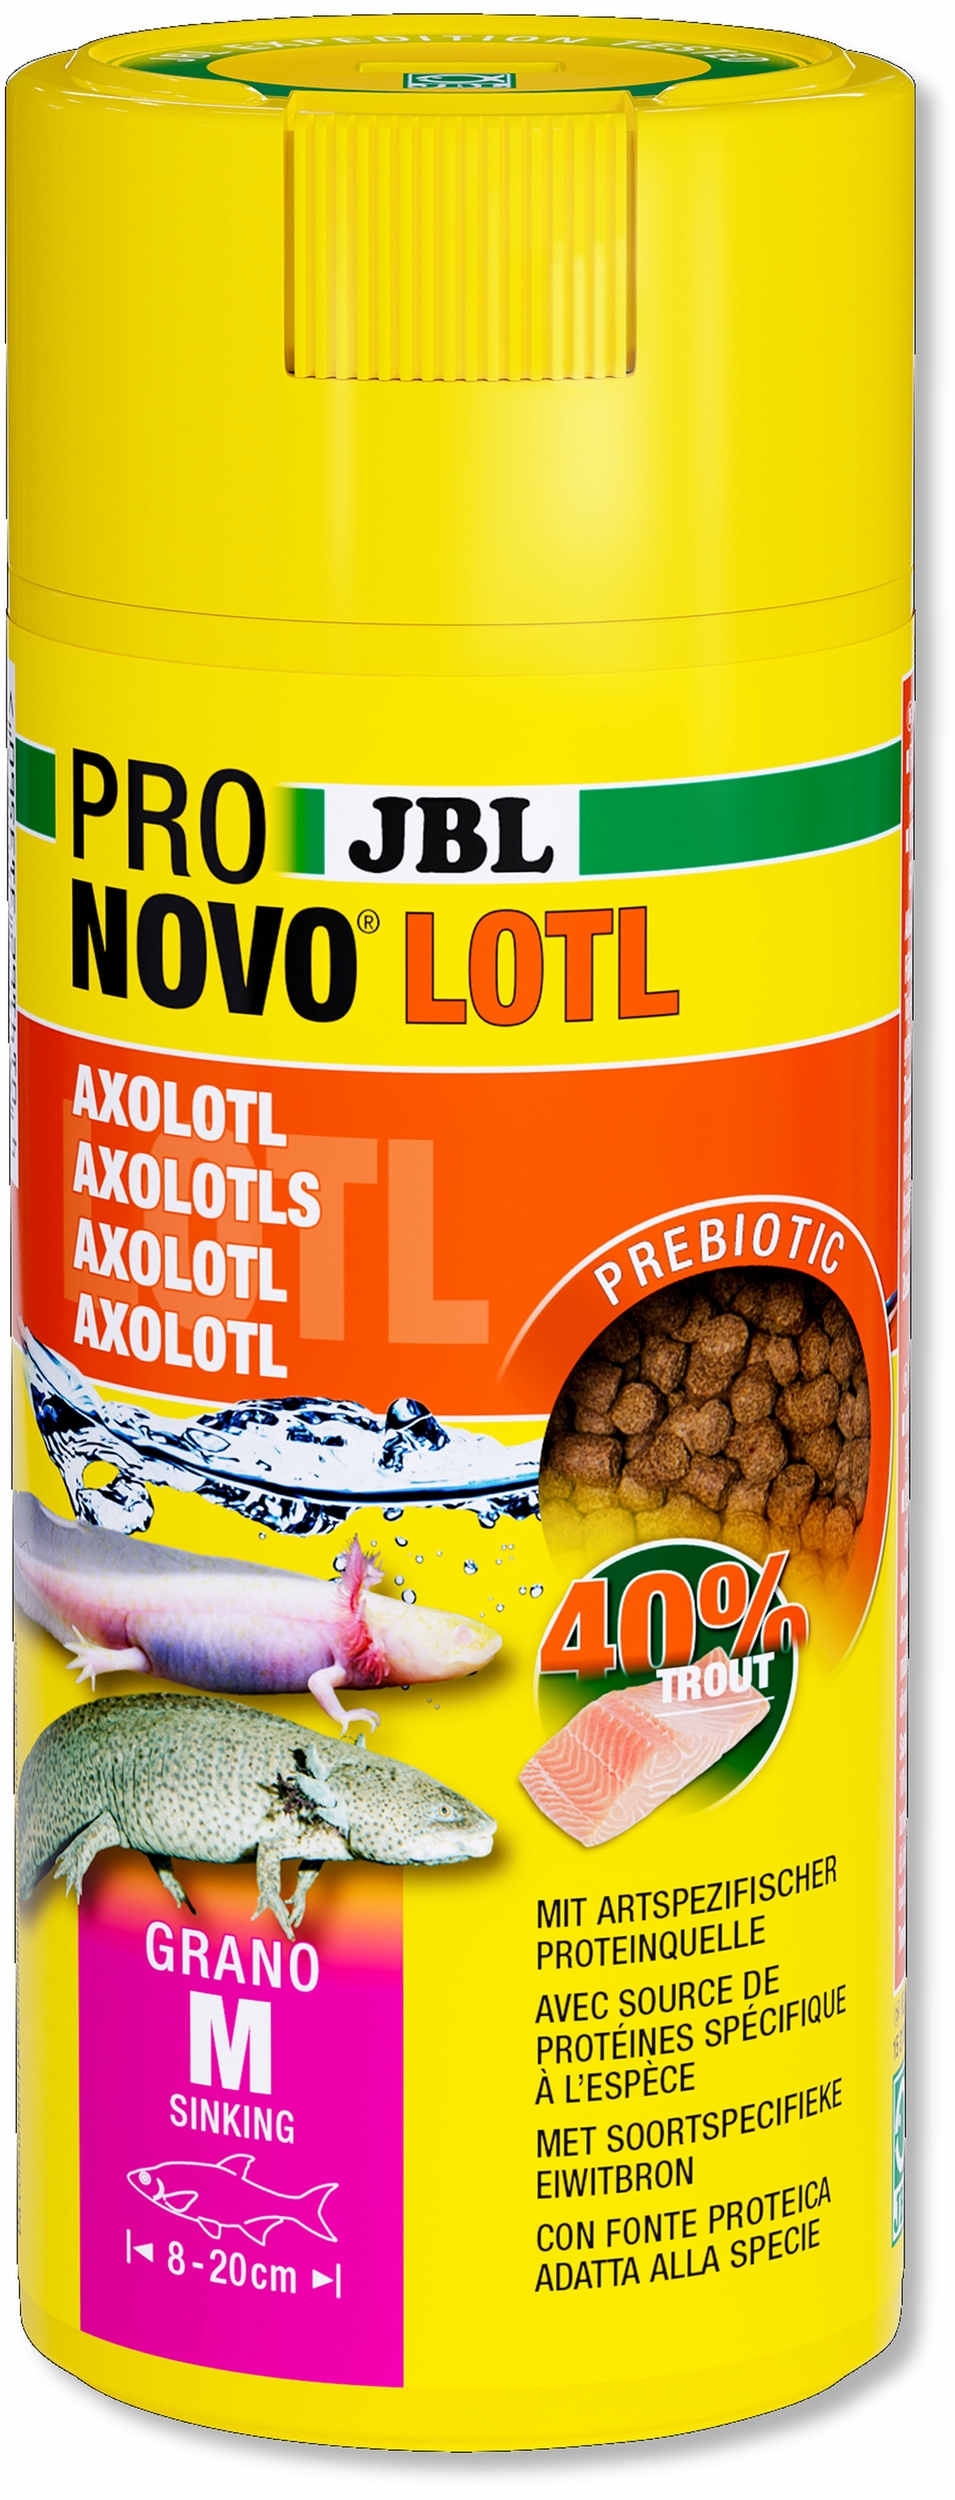 jbl-pronovo-lotl-grano-m-250-ml-perles-alimentaires-submersibles-pour-axolotls-de-8-a-20-cm-min